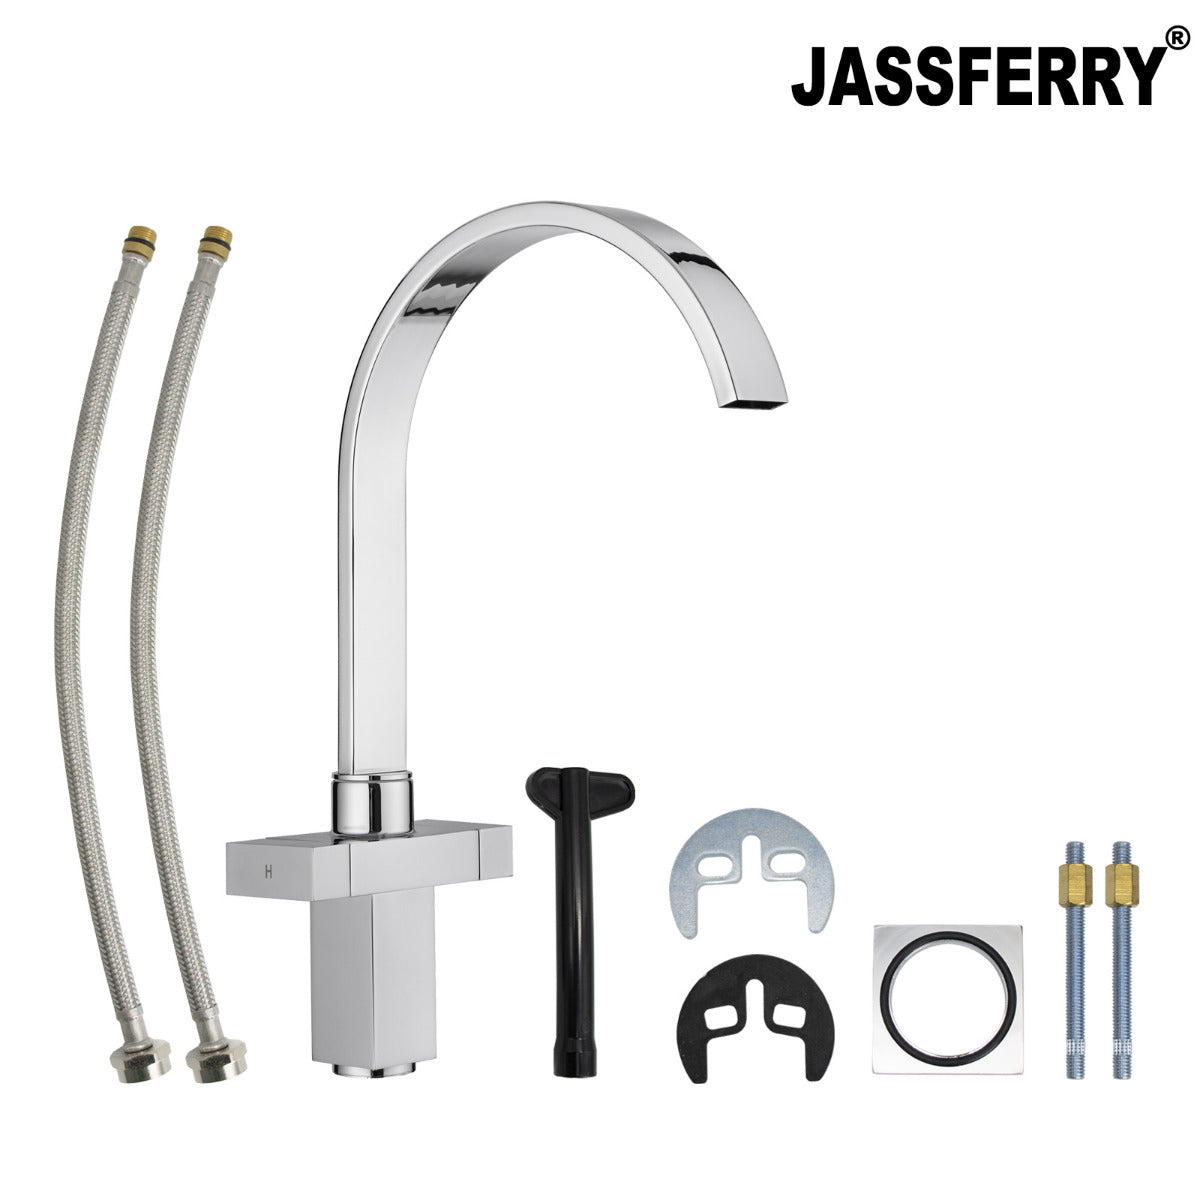 JassferryJASSFERRY Kitchen Sink Mixer Taps Dual Cuboid Design Lever Swivel Spout ChromeKitchen taps